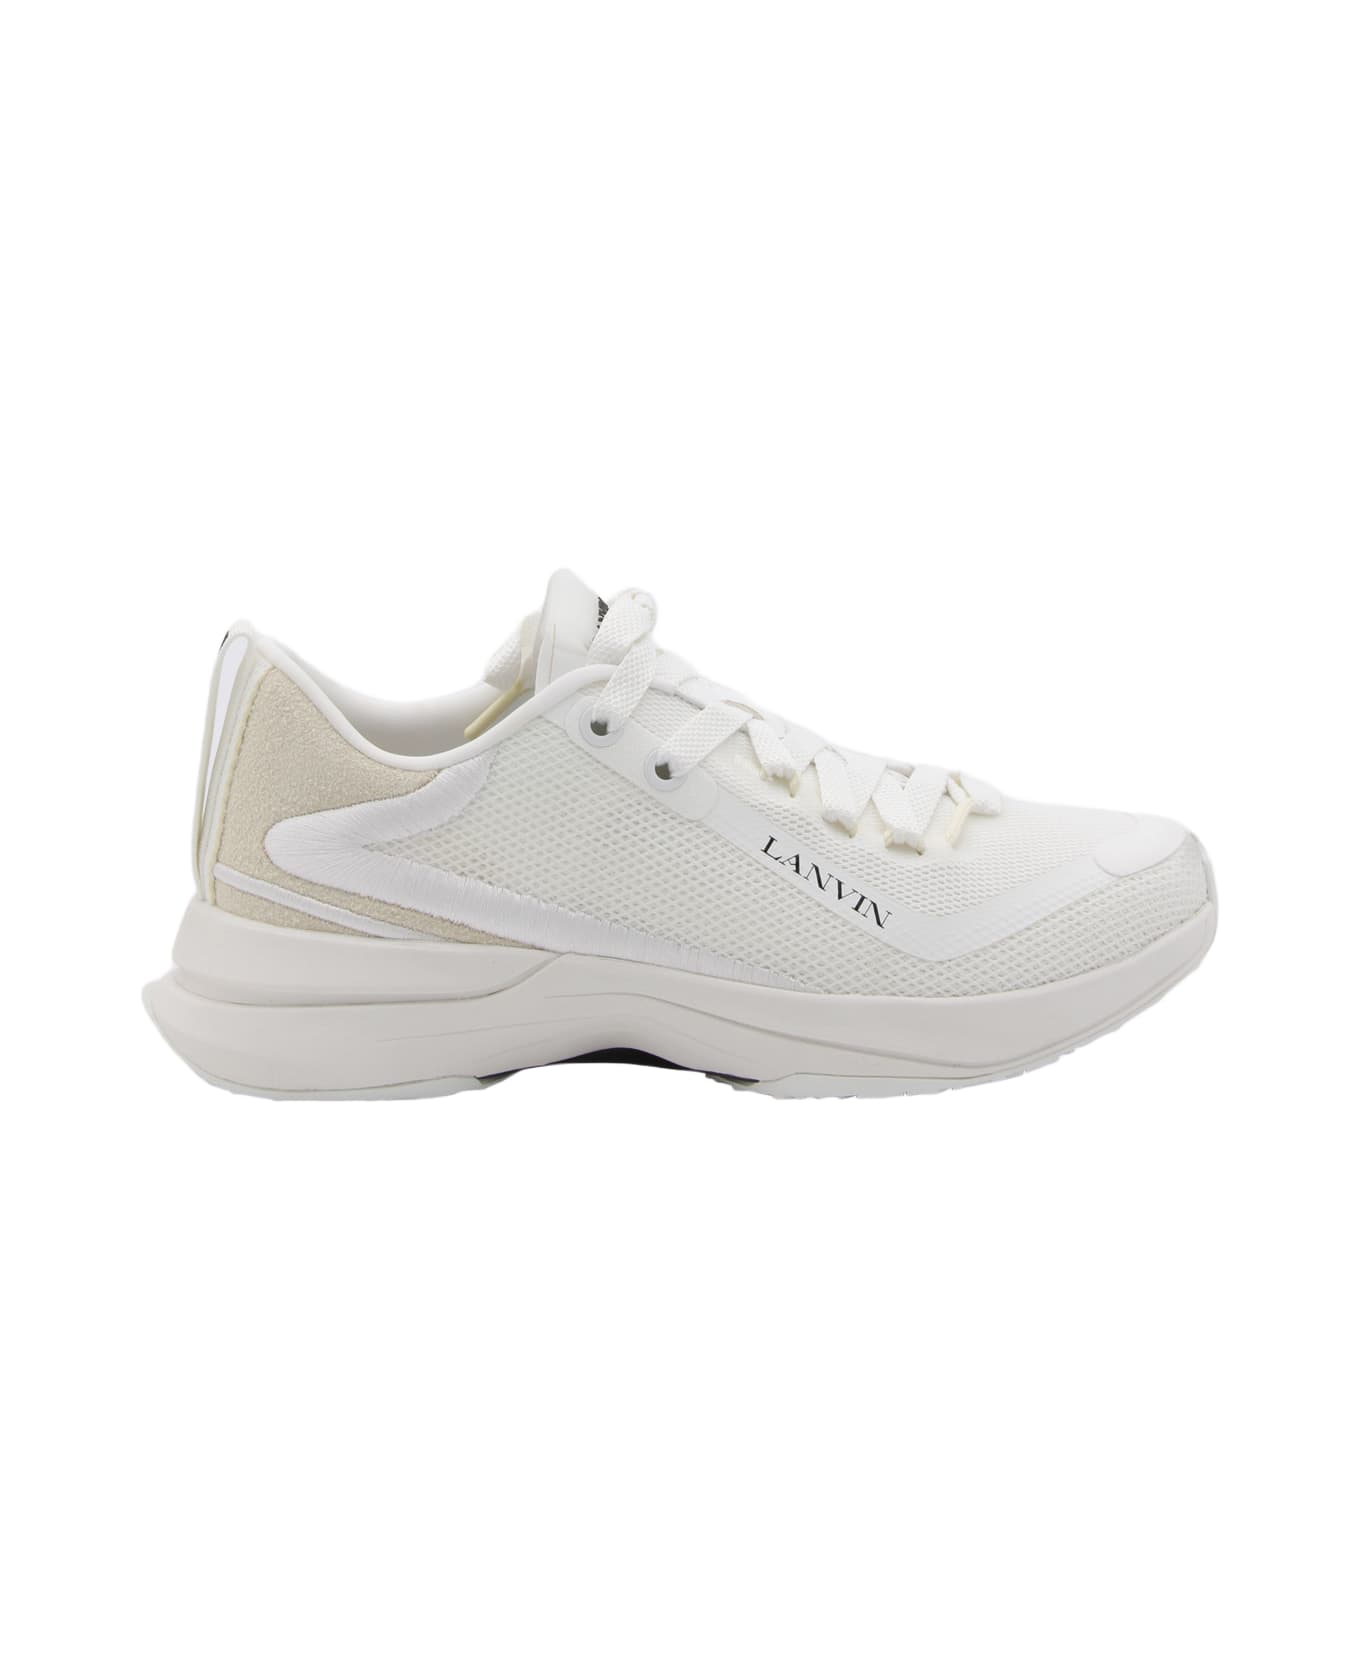 Lanvin White Leather Sneakers - White